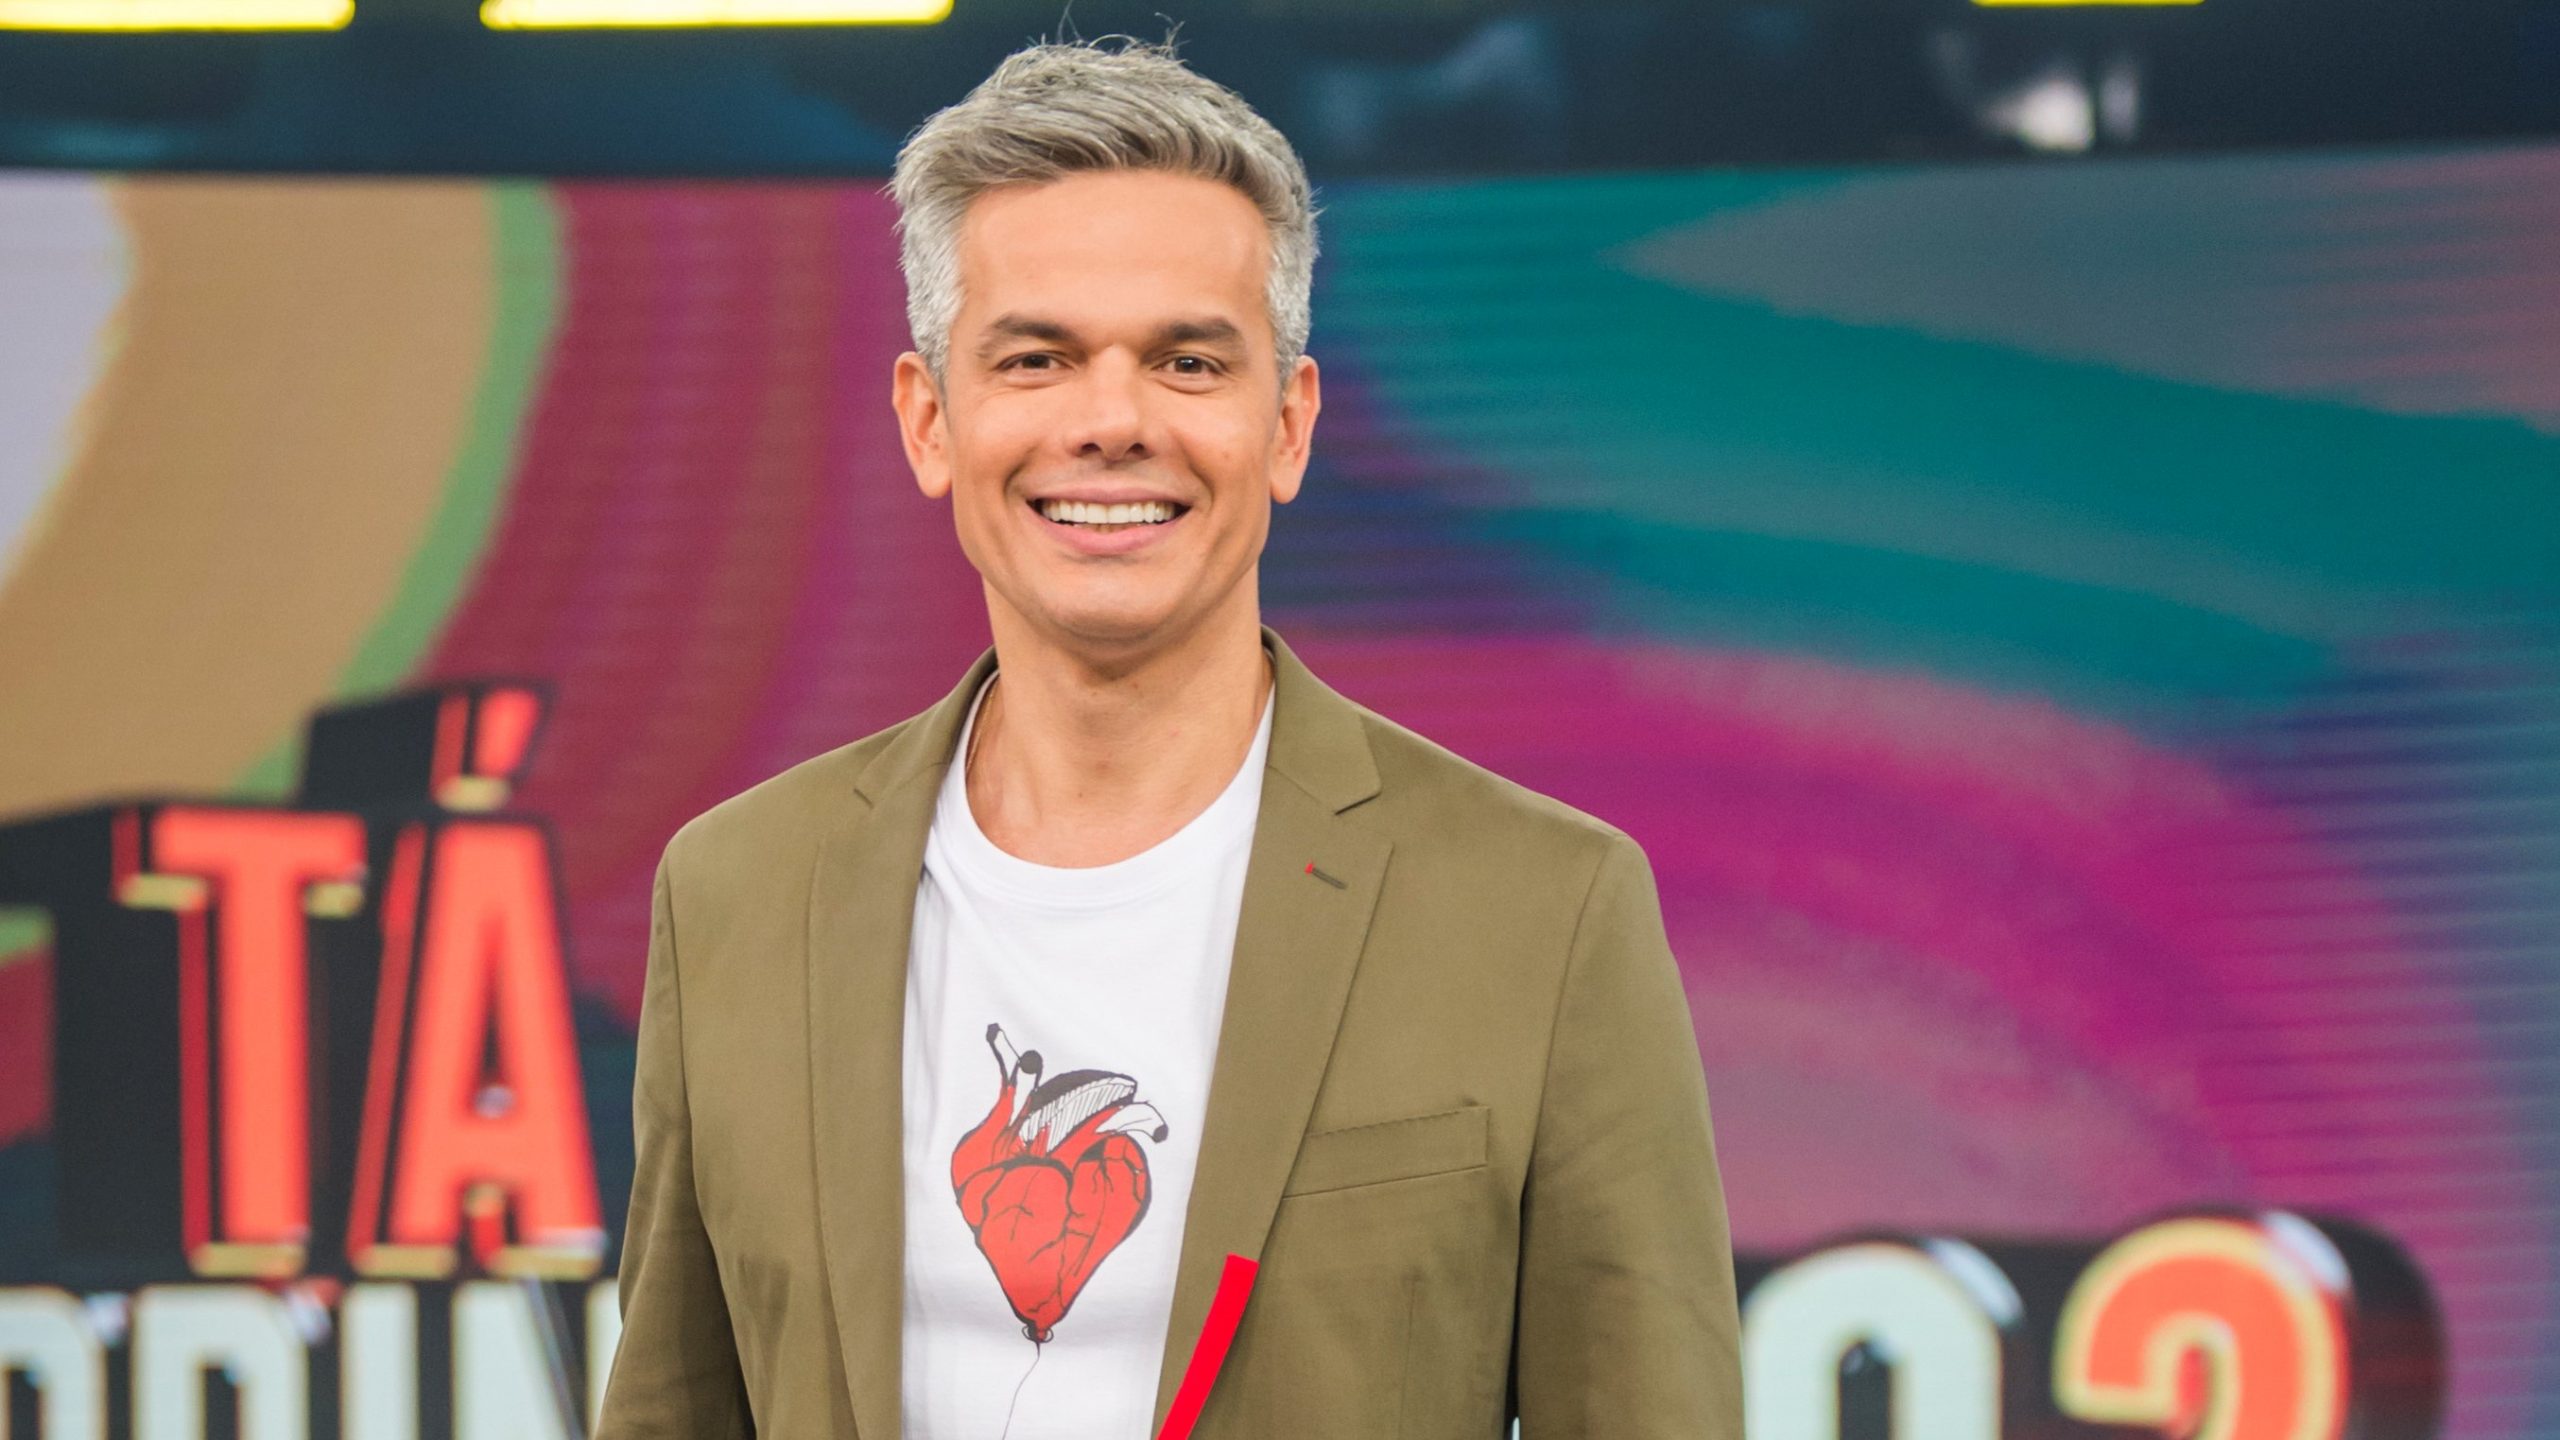 Após deixar a Globo, Otaviano Costa recusa convite de concorrente, diz jornal